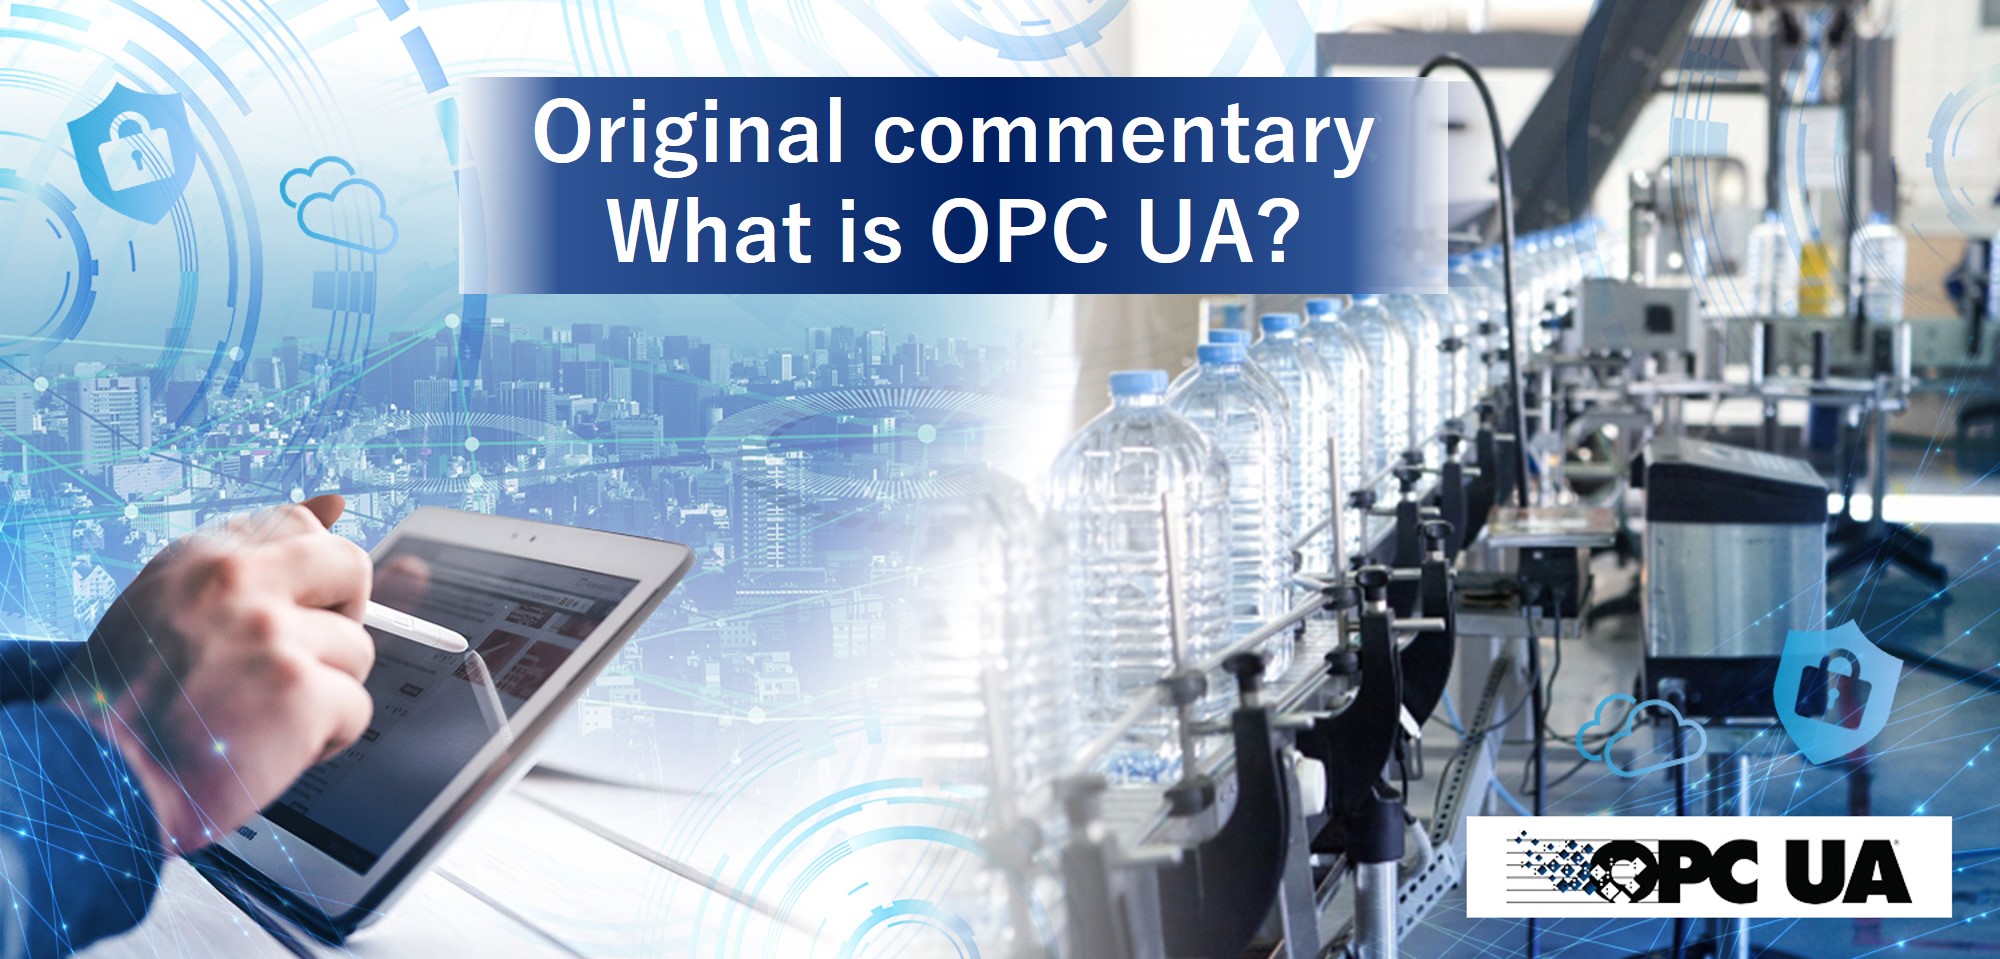 6. Update on OPC UA